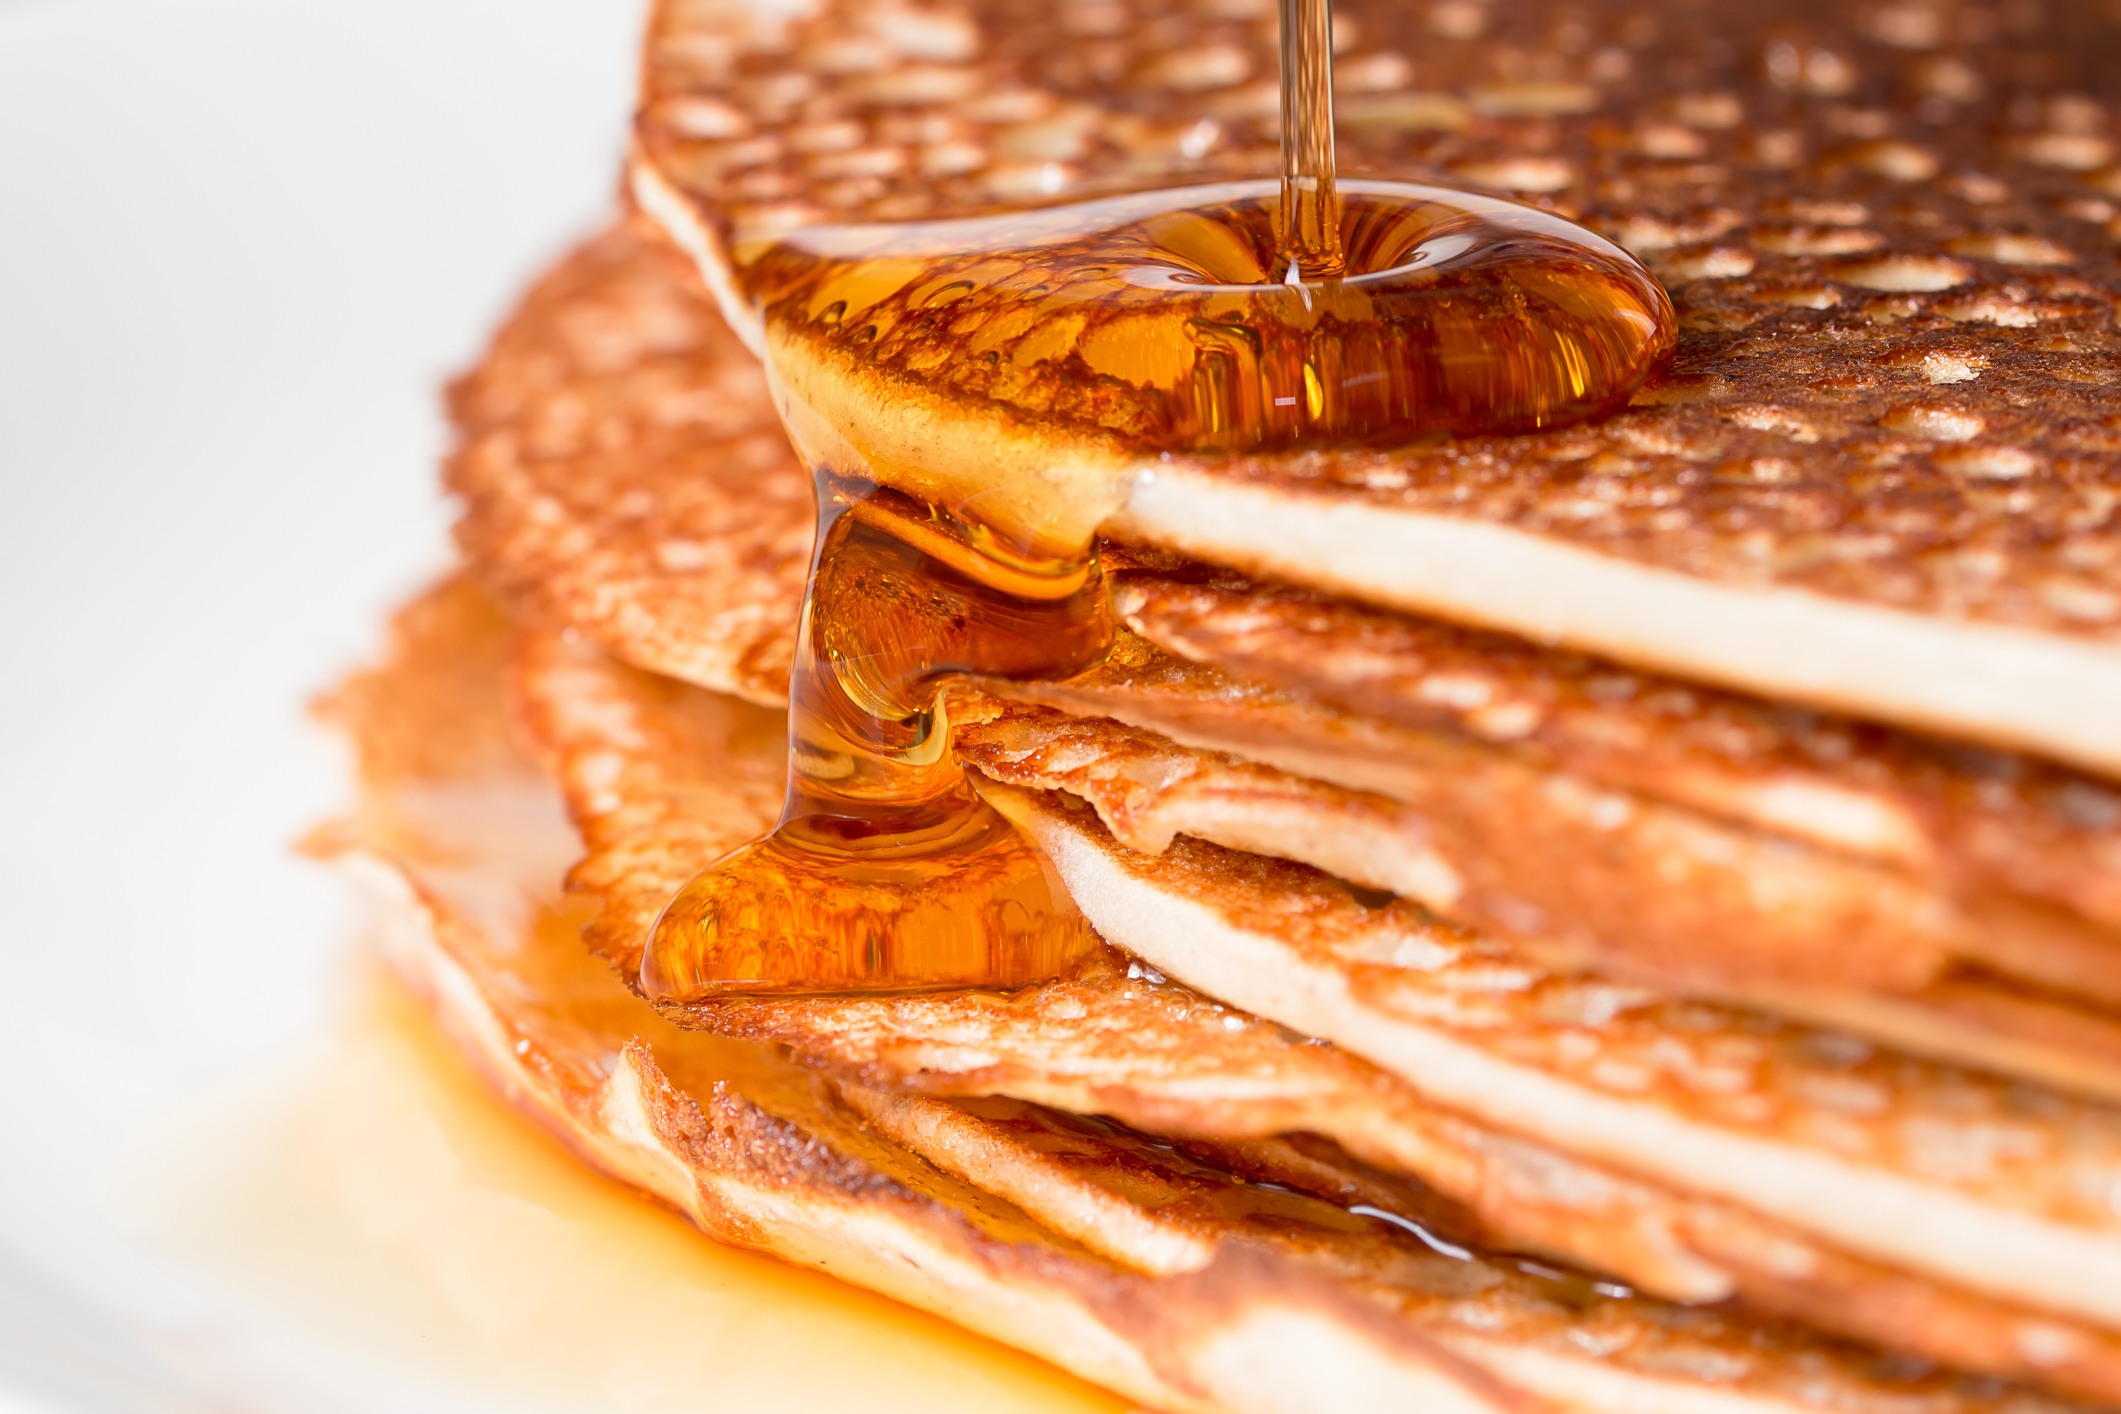 Maria’s Cafe In Minneapolis Has Minnesota’s Best Pancakes, According To Rankings